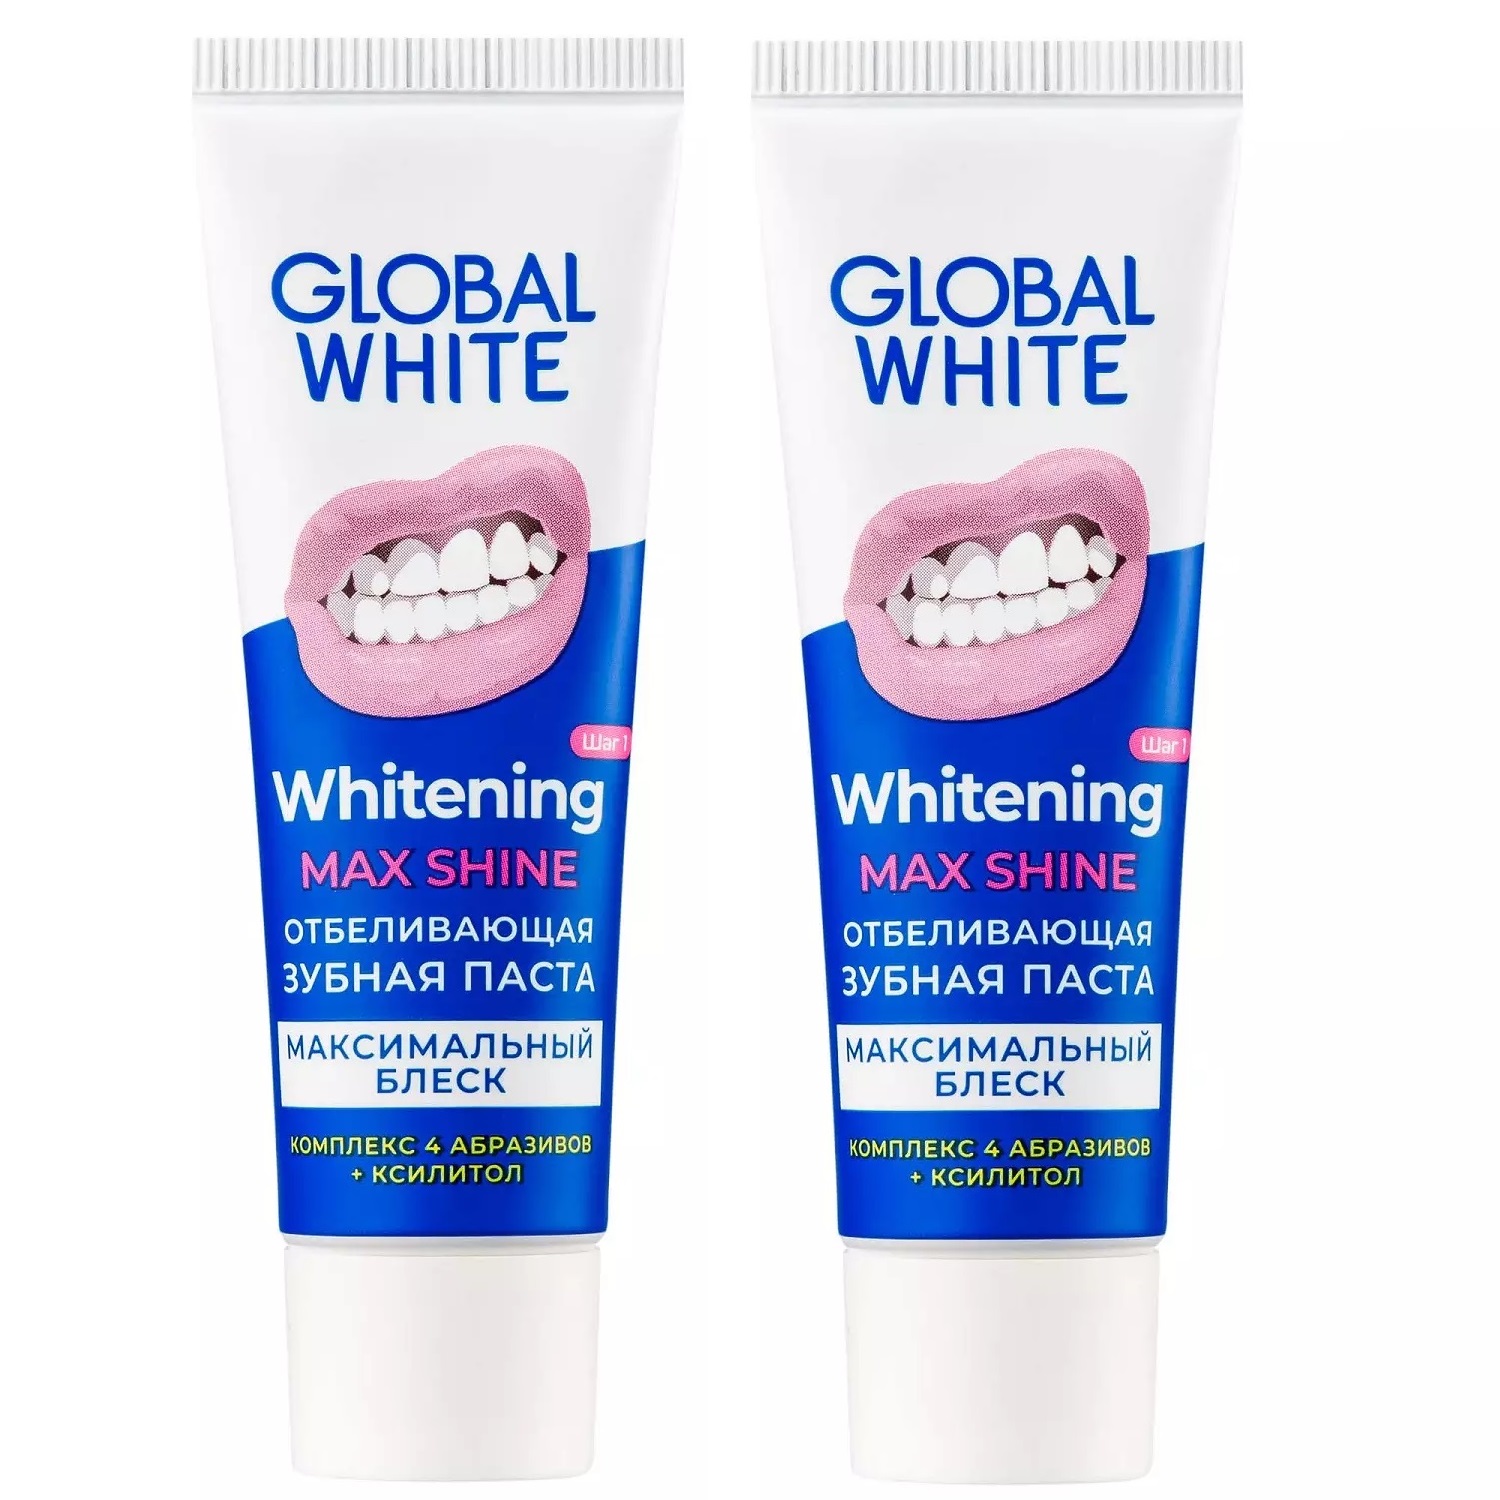 Global White Набор: отбеливающая зубная паста Max Shine, 2 х 30 мл (Global White, Подготовка к отбеливанию) global white отбеливающая зубная паста max shine 100 г global white подготовка к отбеливанию